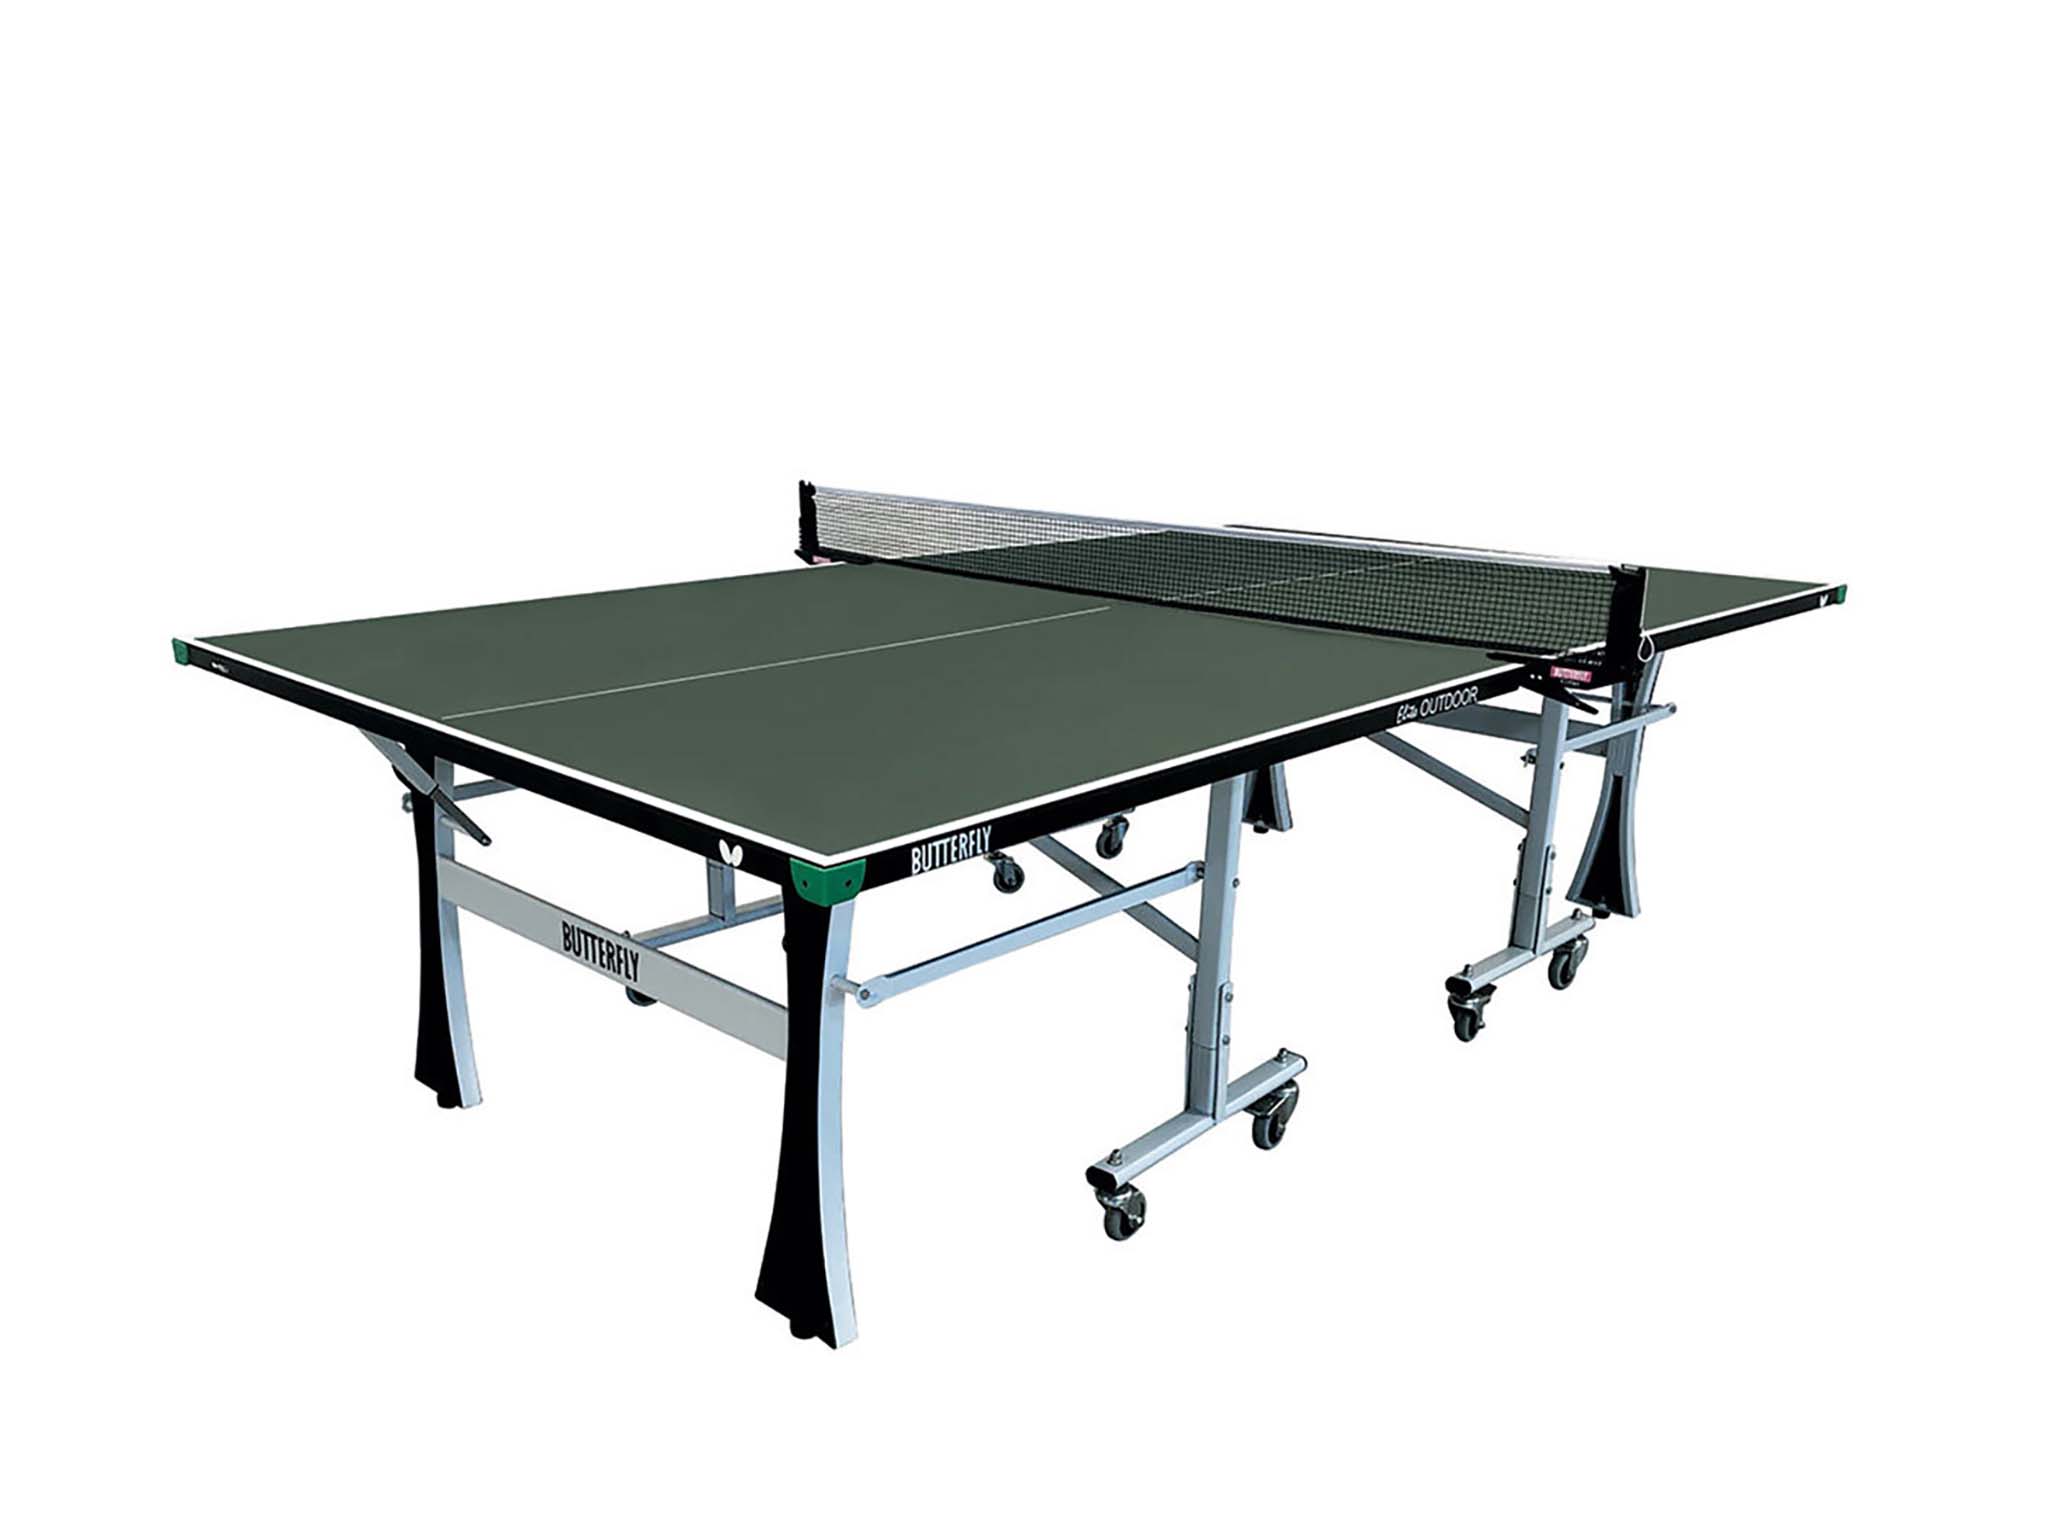 NO LEGS NO NET NO BATS Butterfly Table Tennis Top Full Size Europe 25 